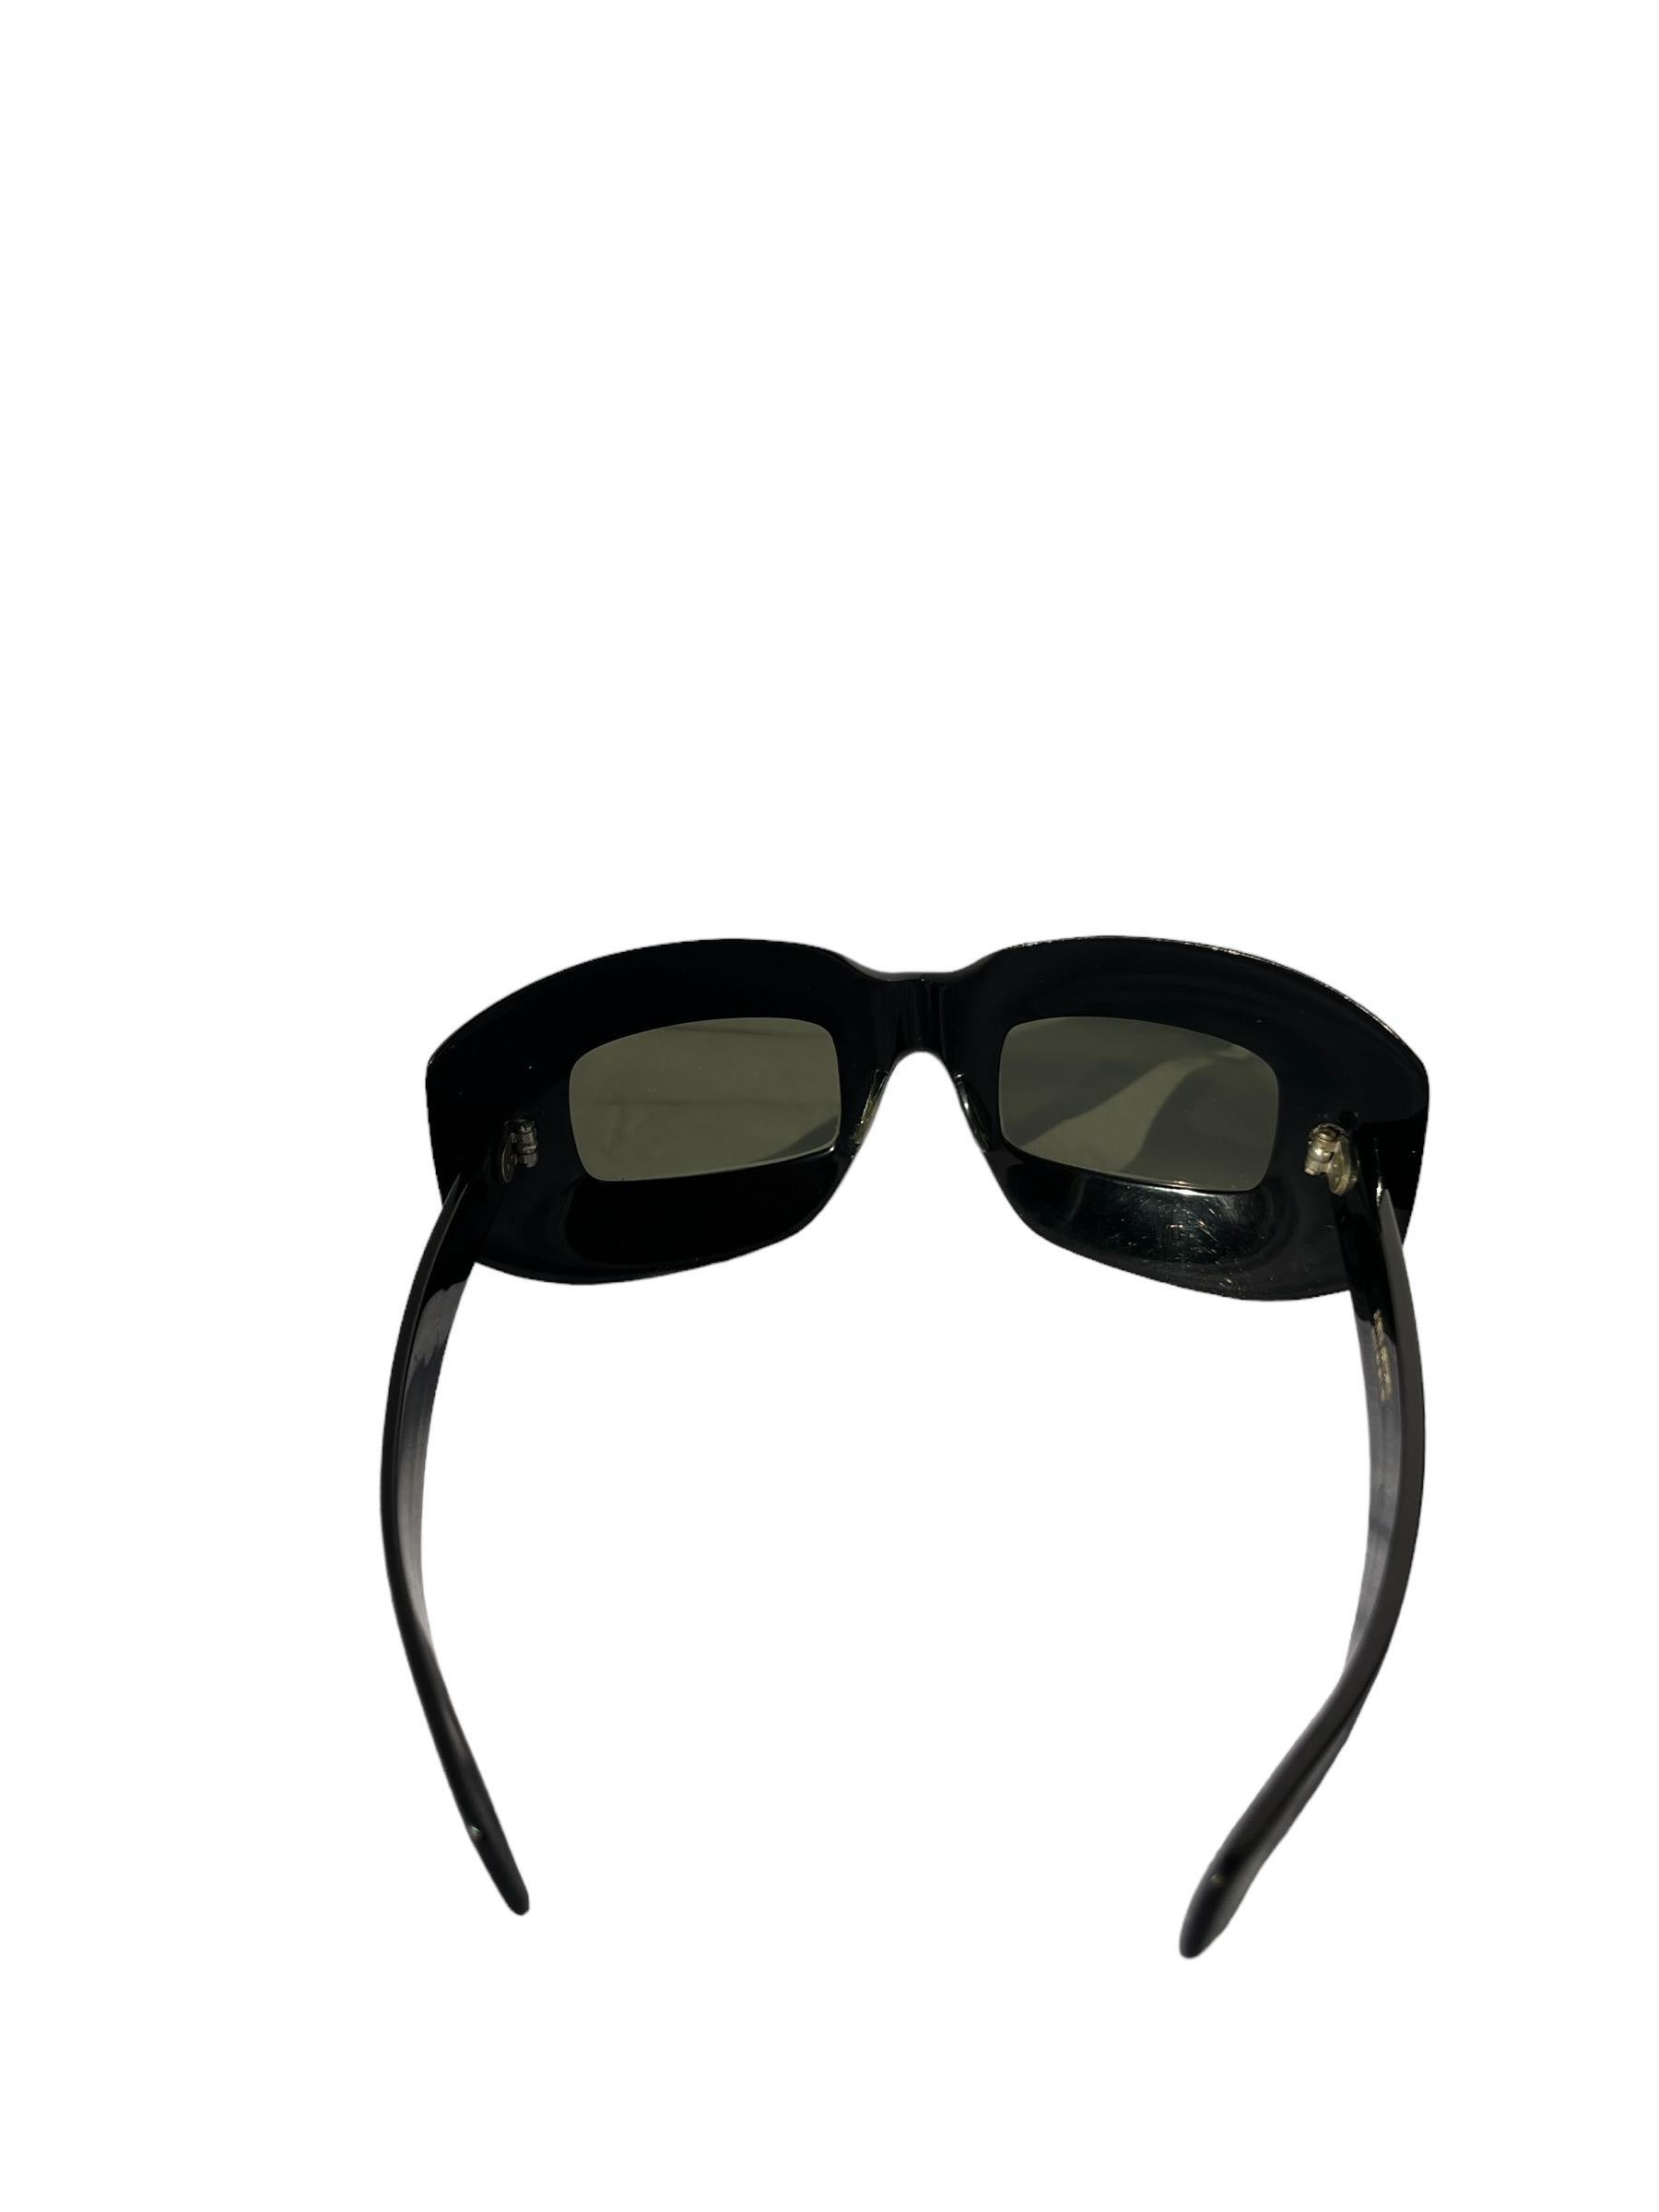 Women's or Men's Vintage 1960s Oliver Goldsmith Mod Black Sunglasses 